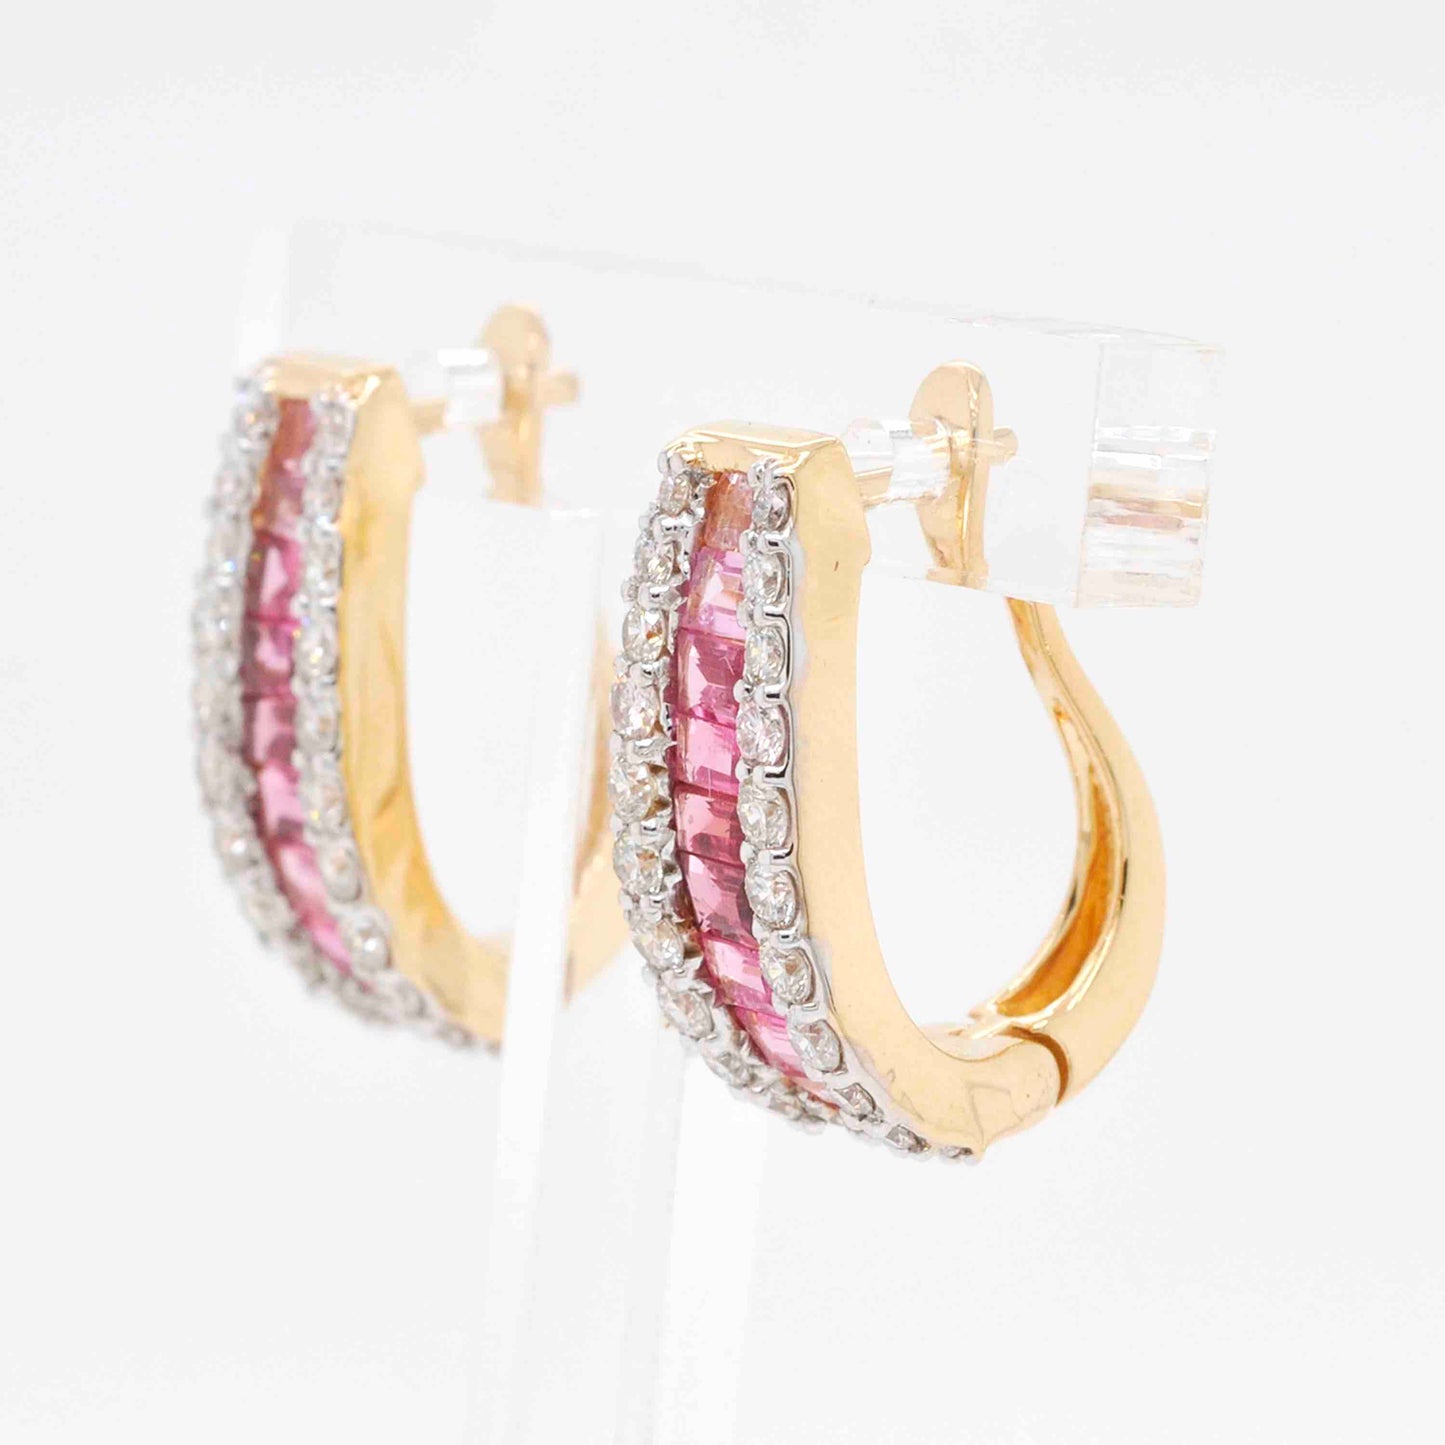 Gradient pink tourmaline jewelry